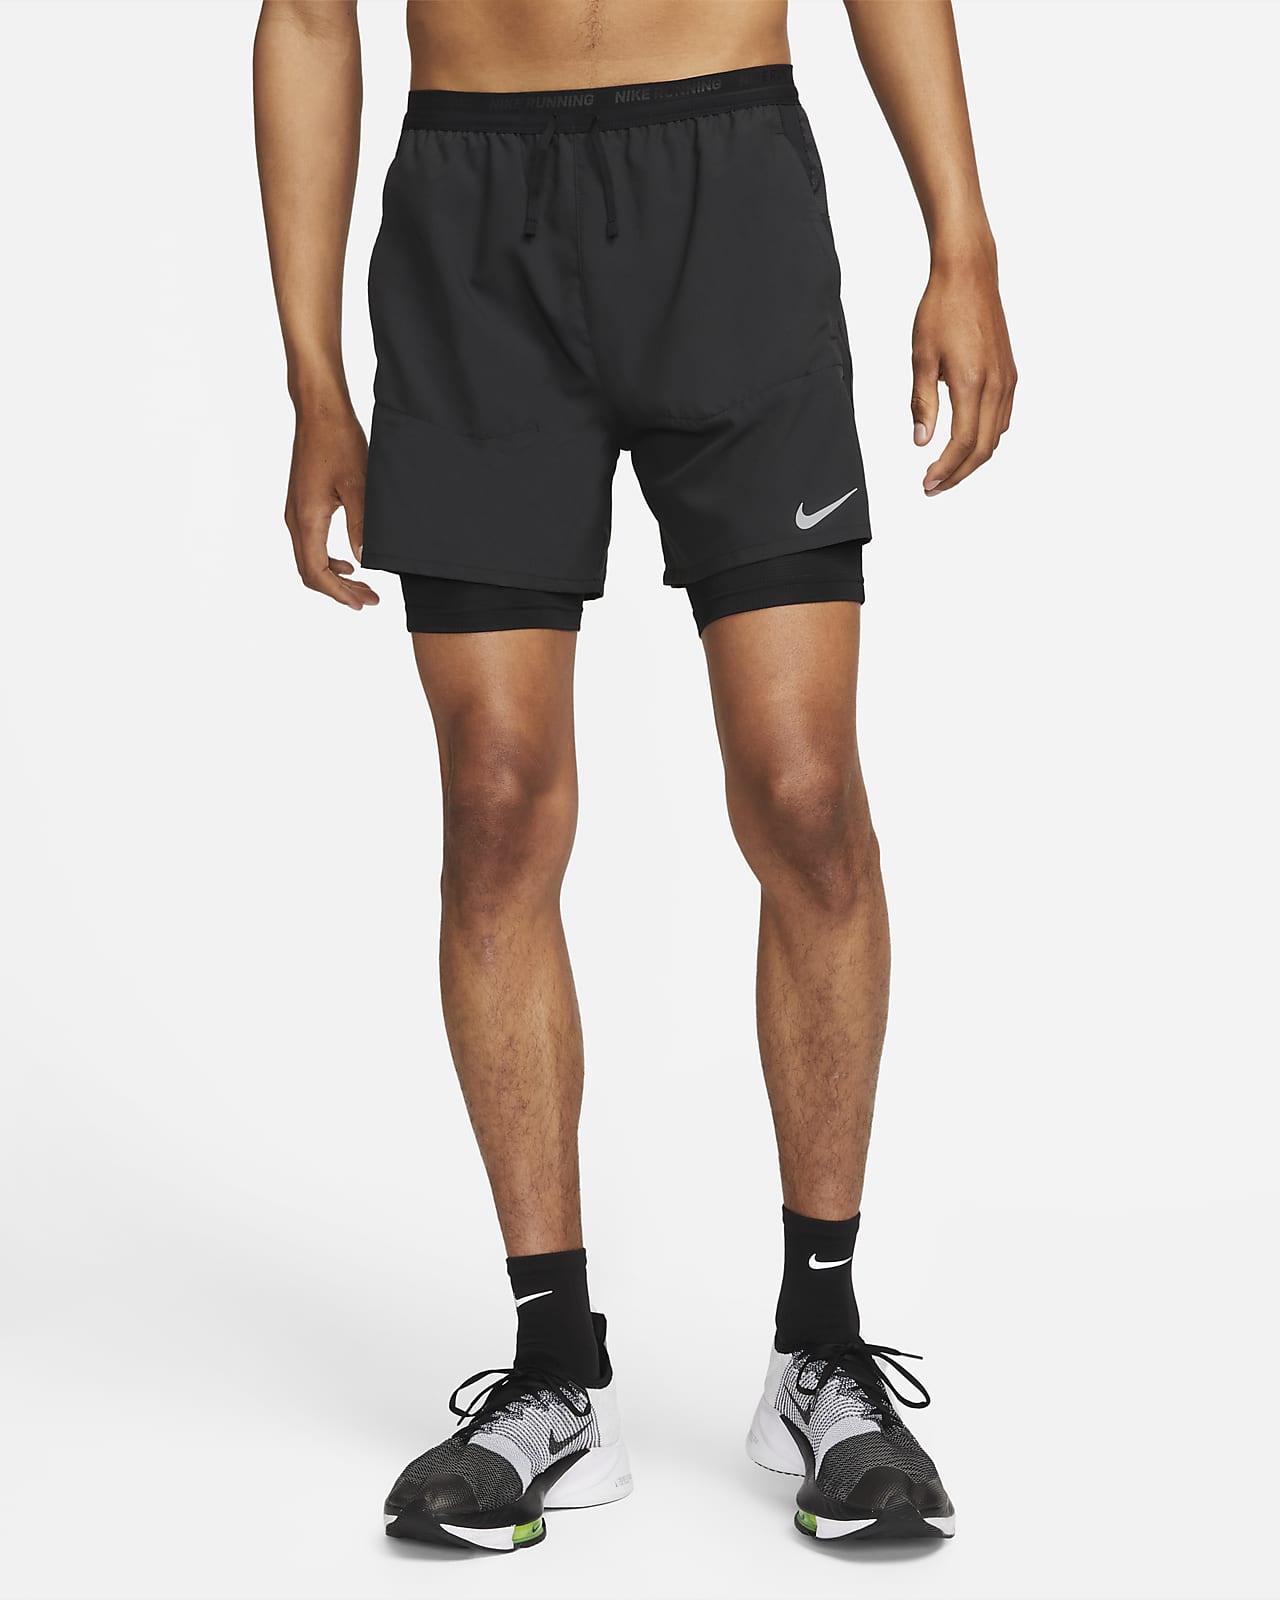 Hommes Running Accessoires et équipement. Nike FR